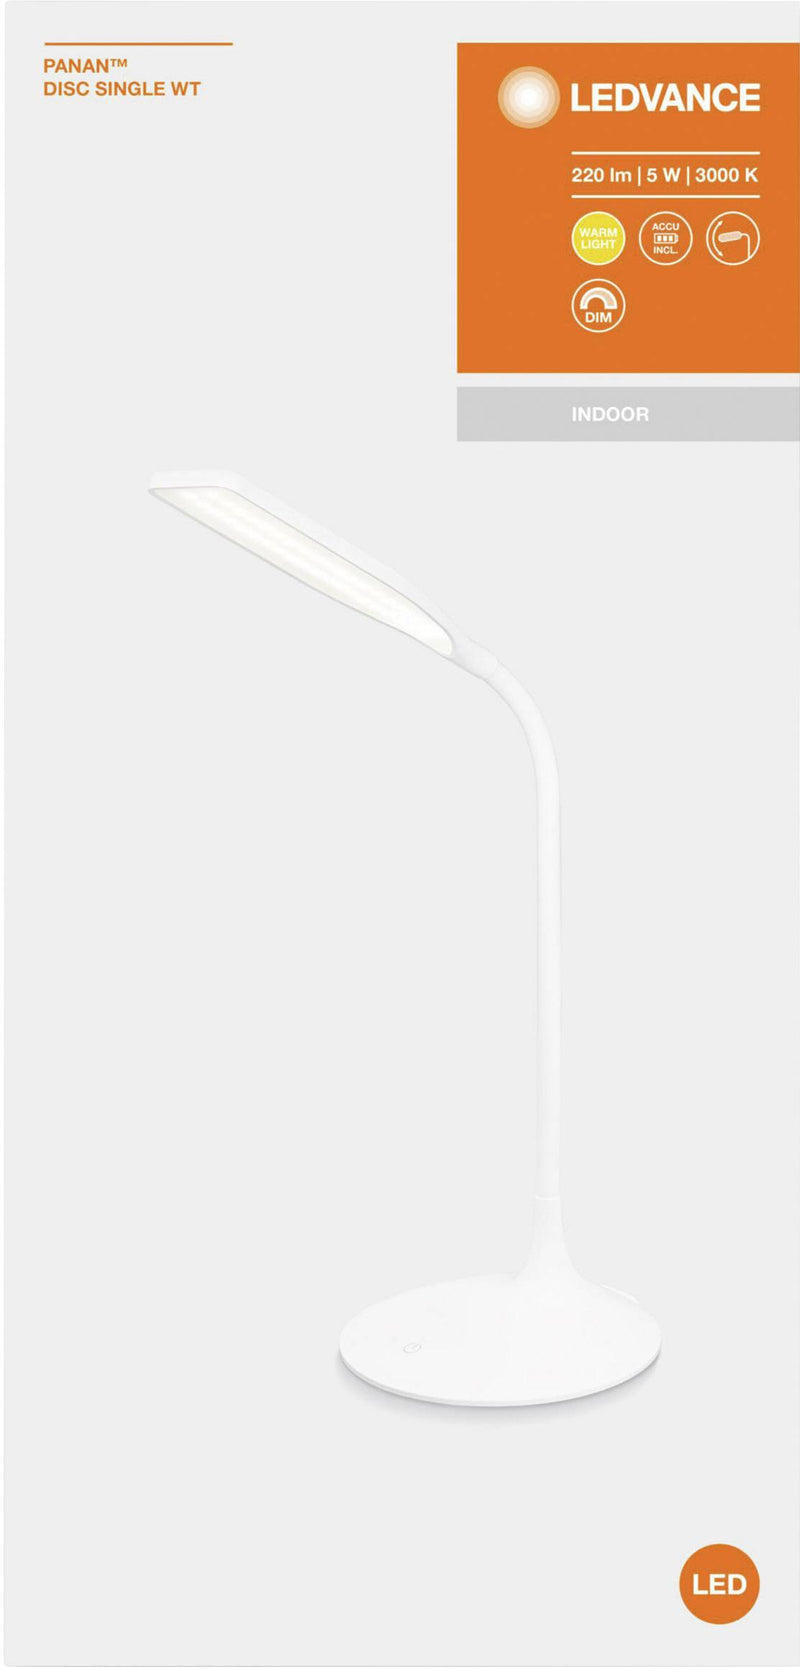 5W(220Lm) LEDVANCE PANAN table lamp, IP20, white, warm white light 3000K